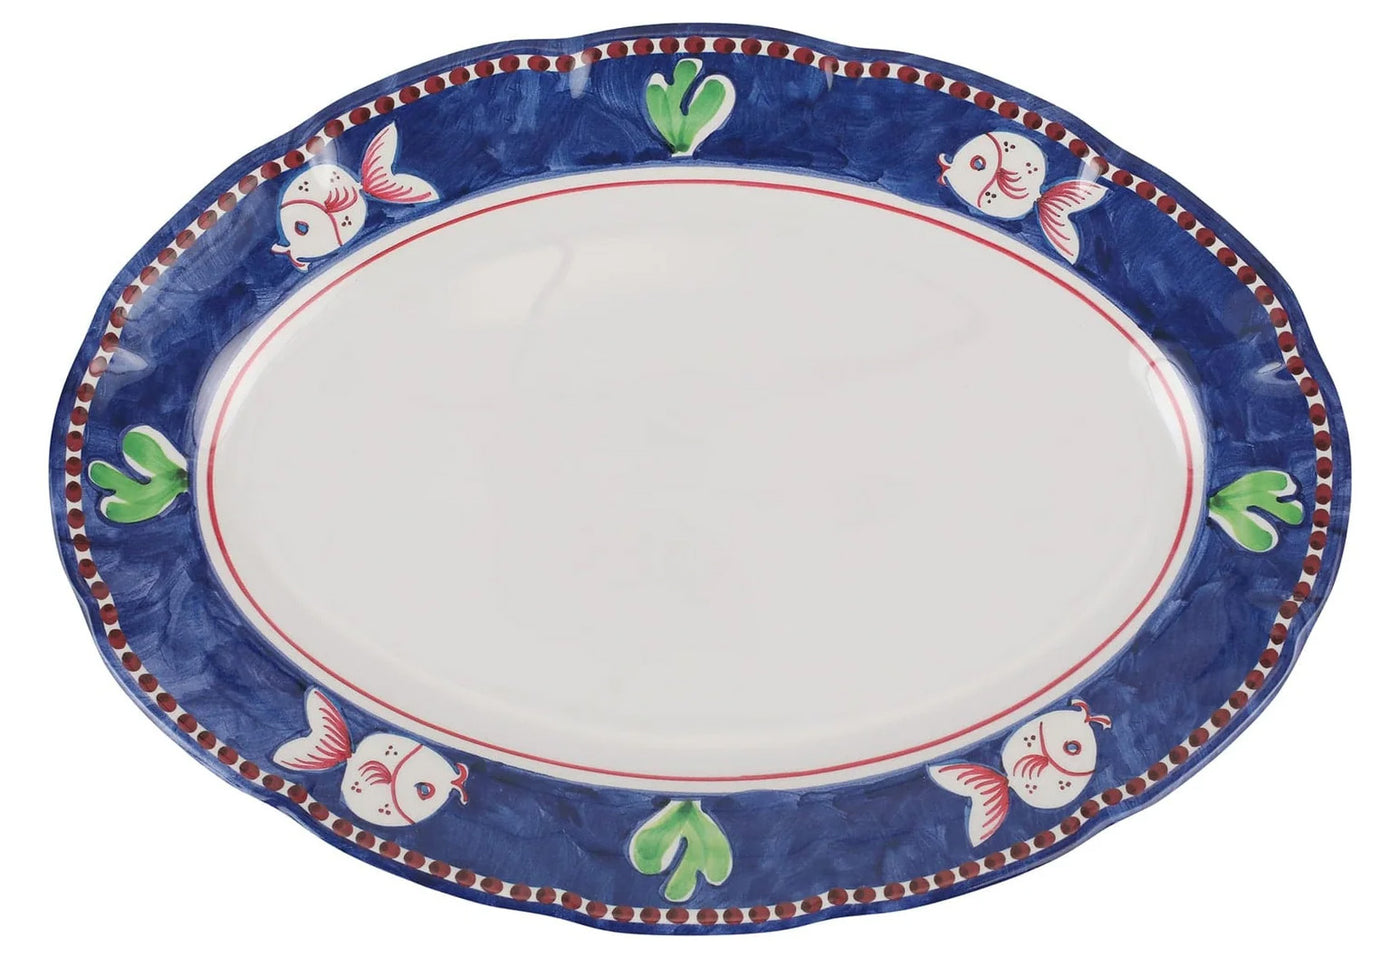 Melamine Campagna Pesce Oval Platter